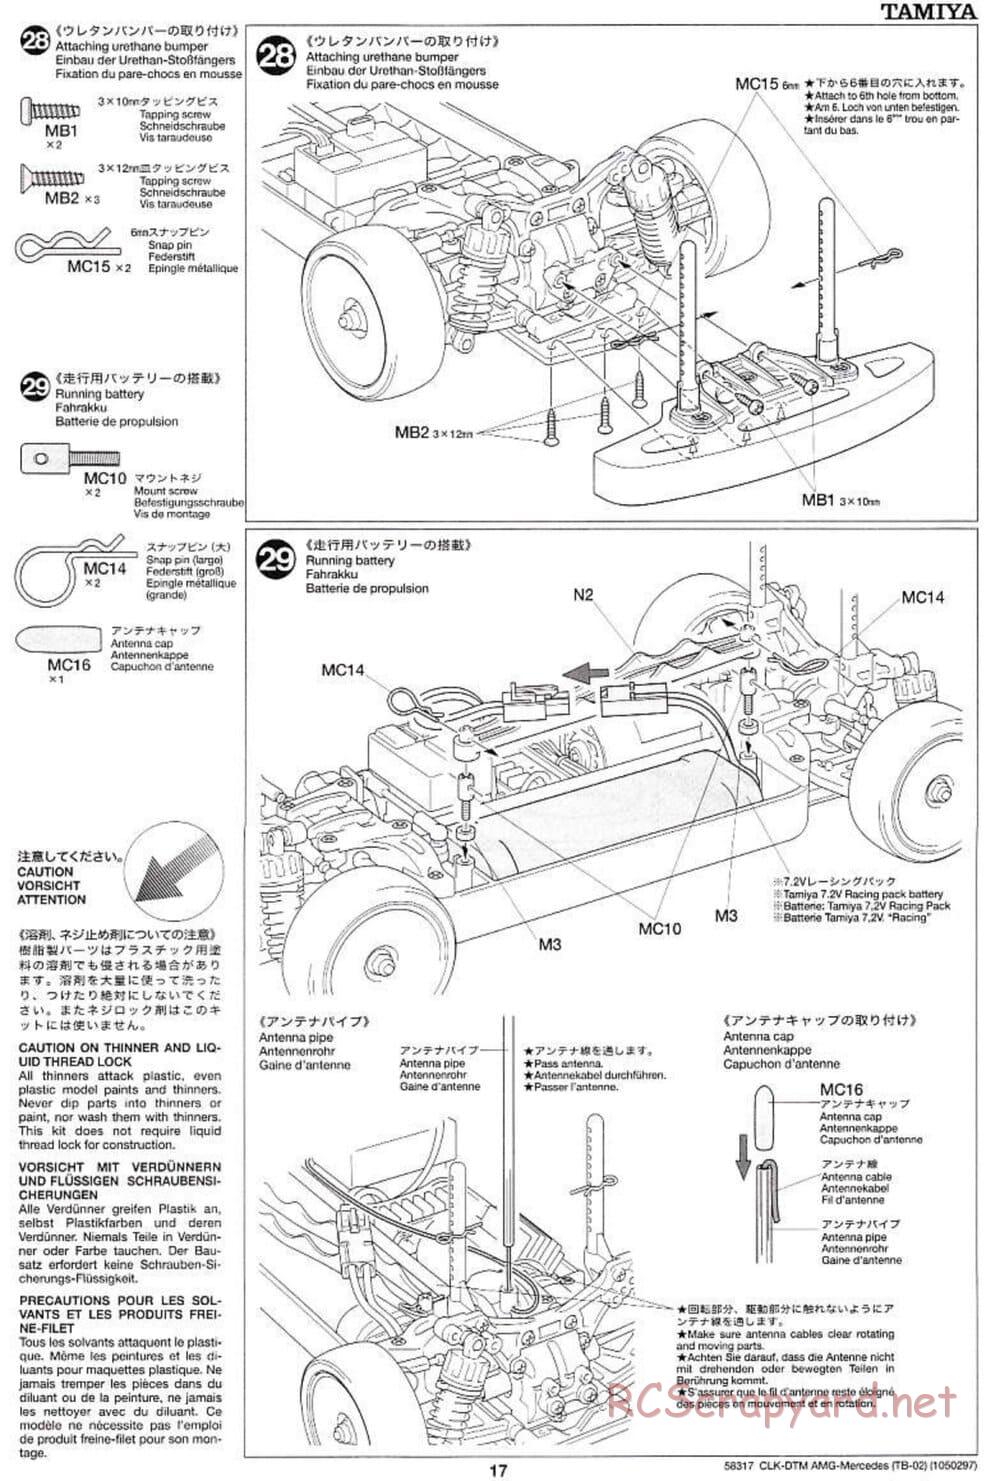 Tamiya - CLK DTM 2002 AMG Mercedes - TB-02 Chassis - Manual - Page 17